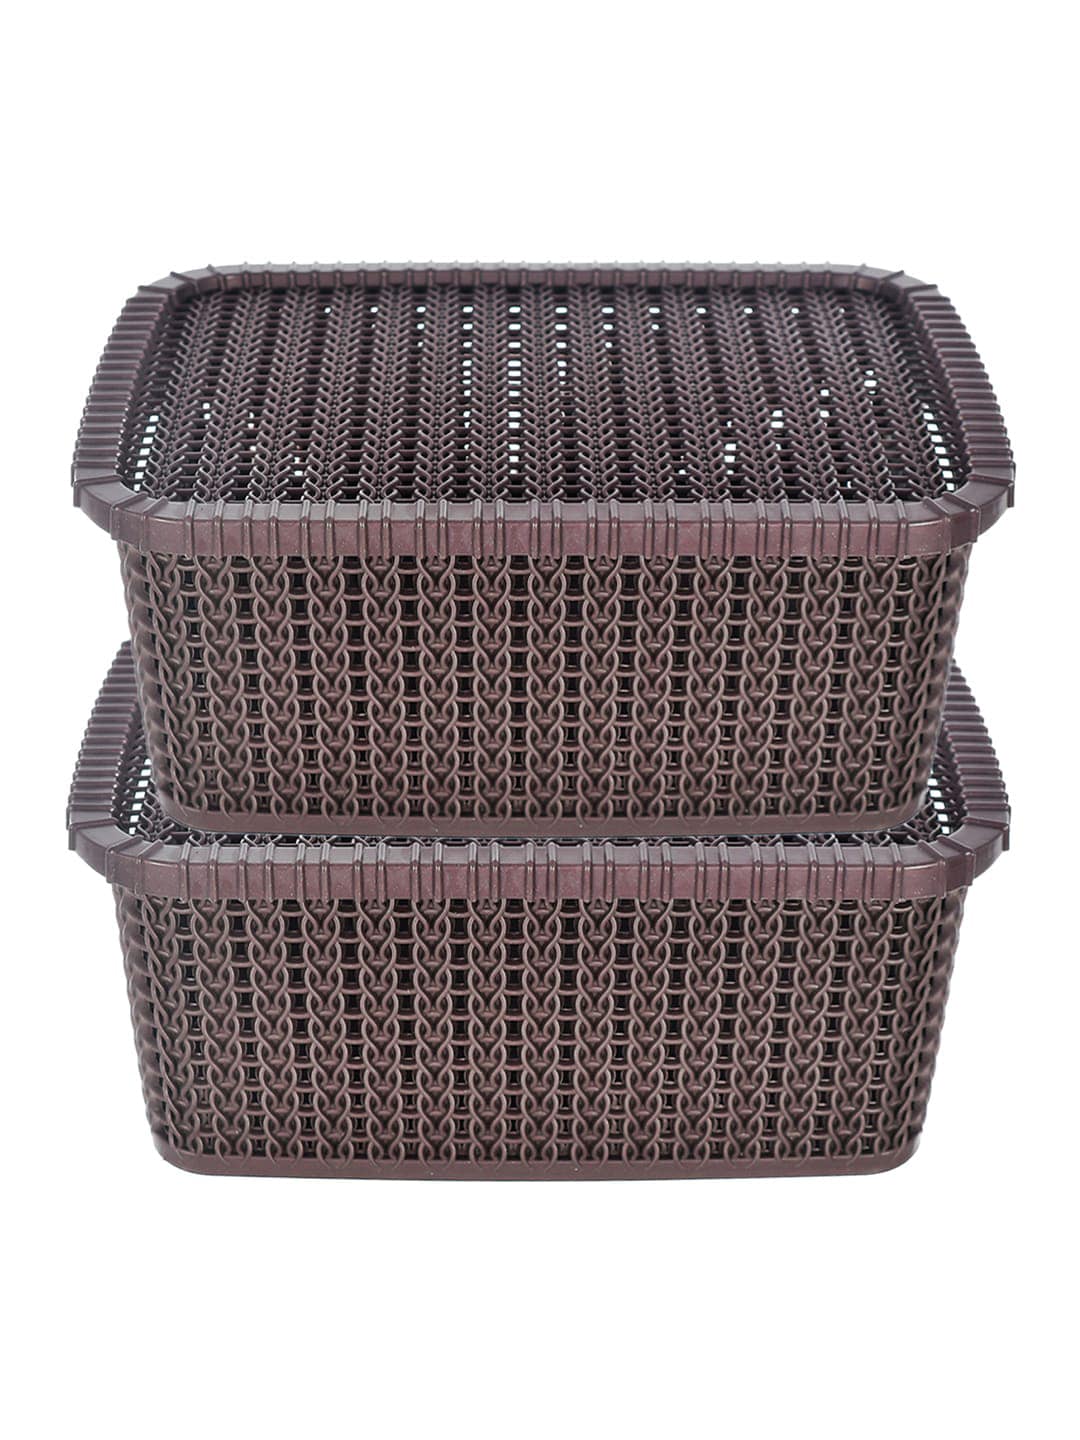 Kuber Industries Set Of 2 Brown Textured Multipurpose Basket Storage With Lids Price in India